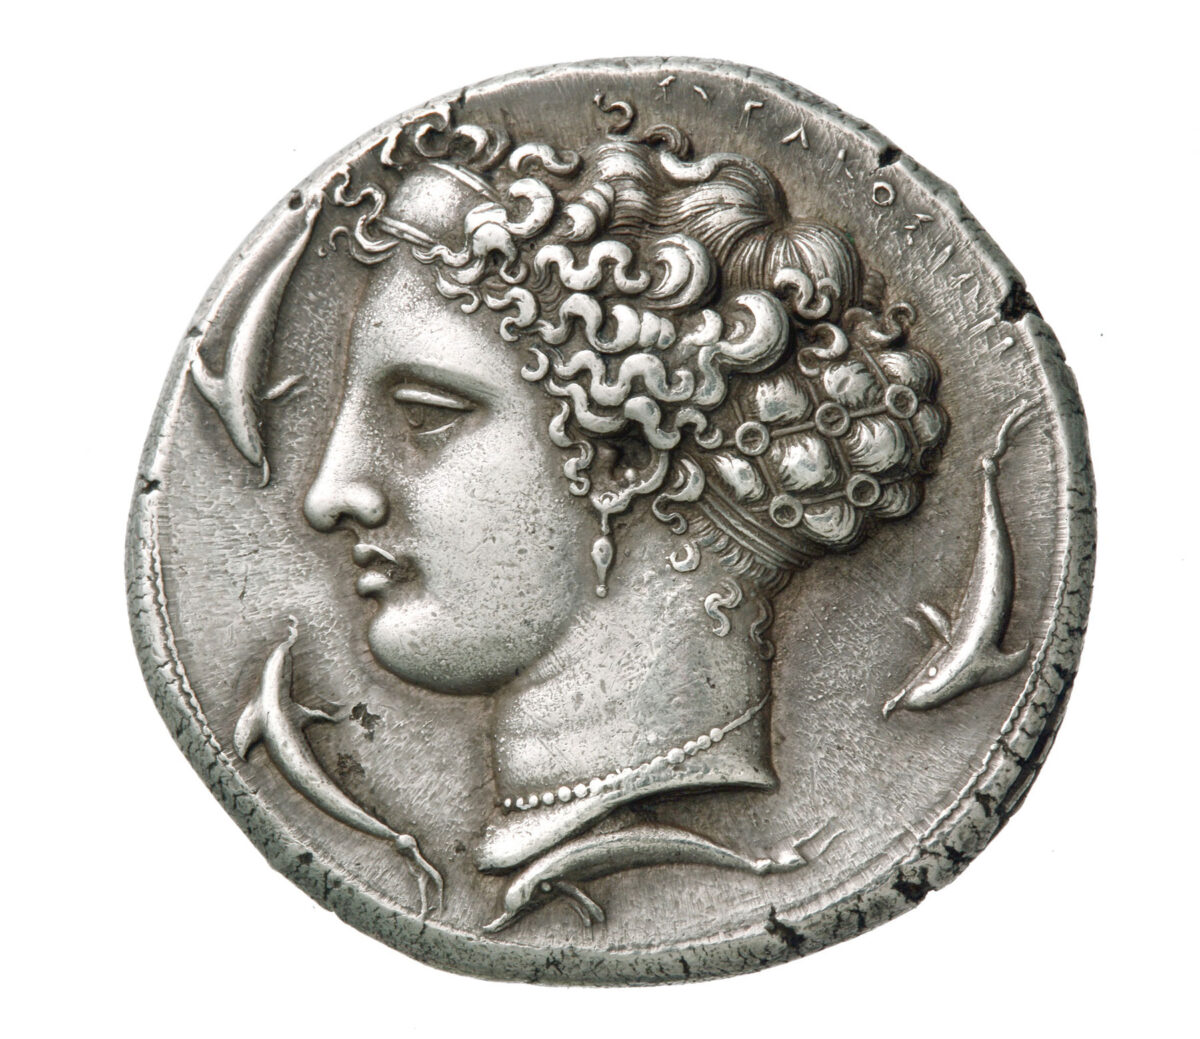 Nymph Arethousa.
Silver decadrachm of Syracuse, Sicily, 400 BC.
